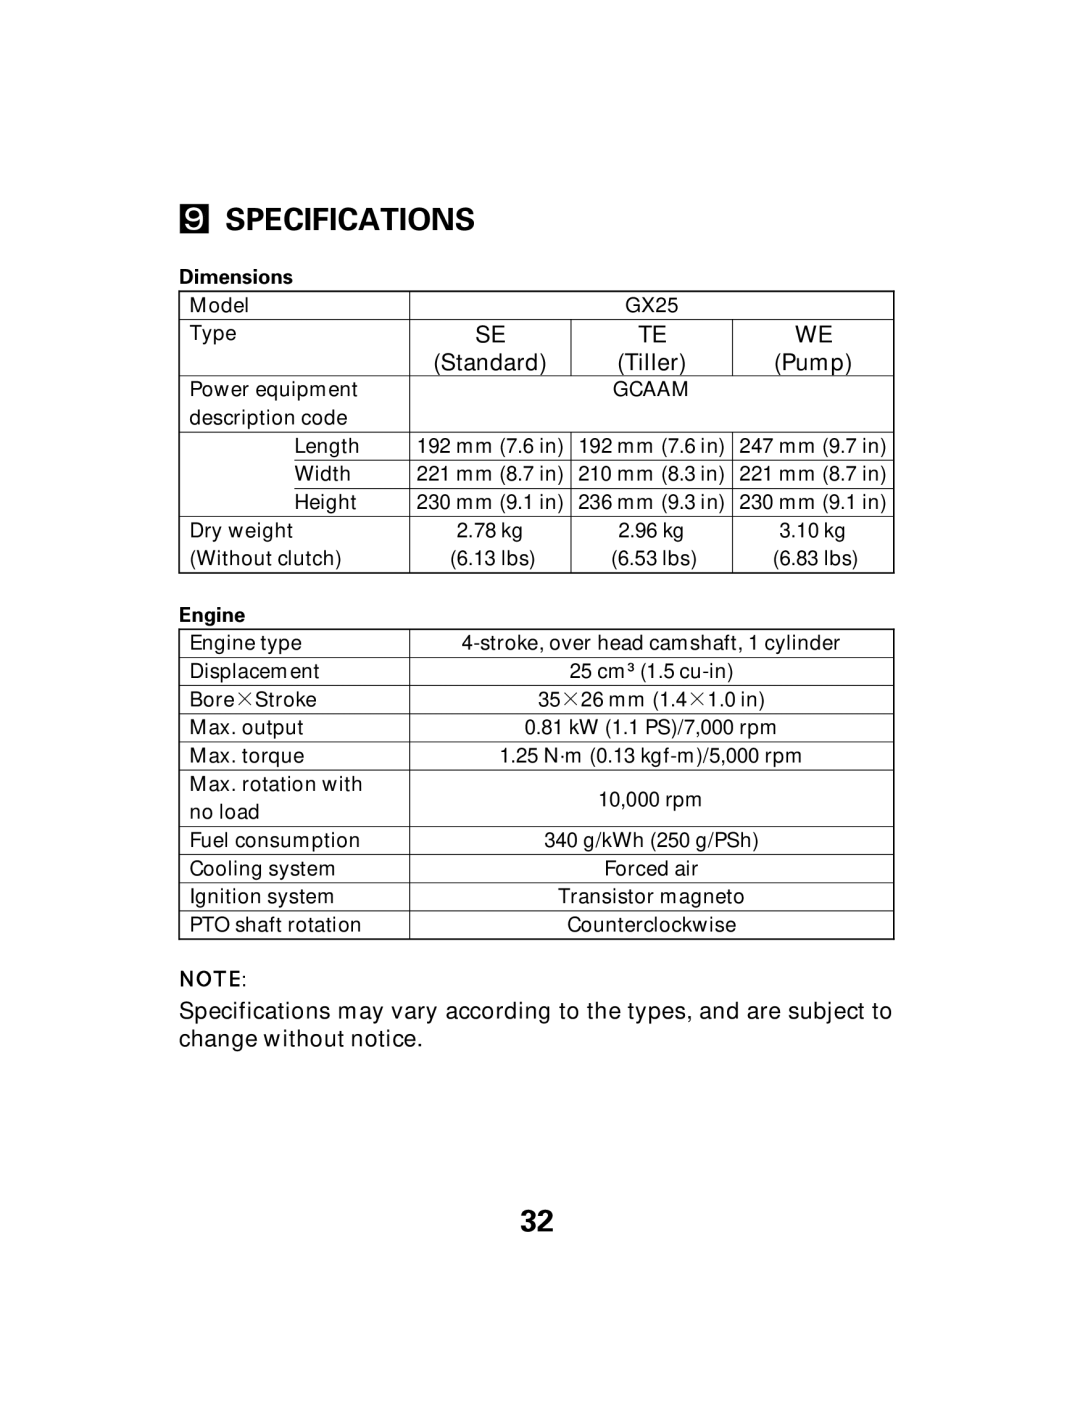 Honda Power Equipment GX25 owner manual Specifications, Standard, Tiller, Pump, Dimensions, Engine 